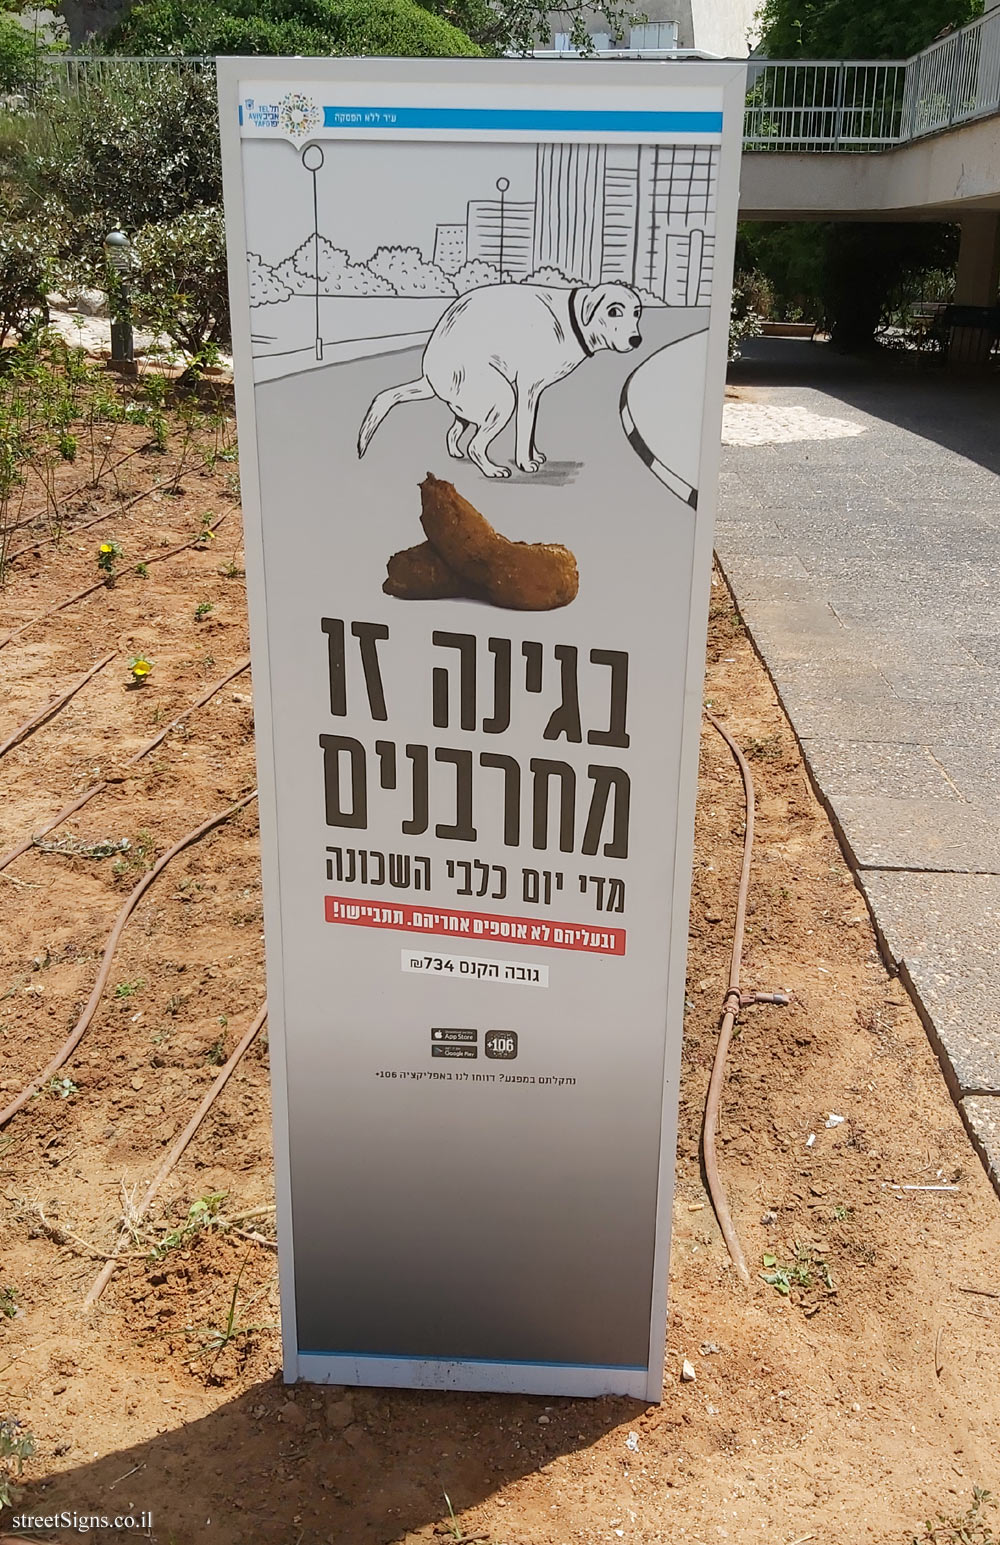 Tel Aviv - Illustrated warning about handling dog poo (2)